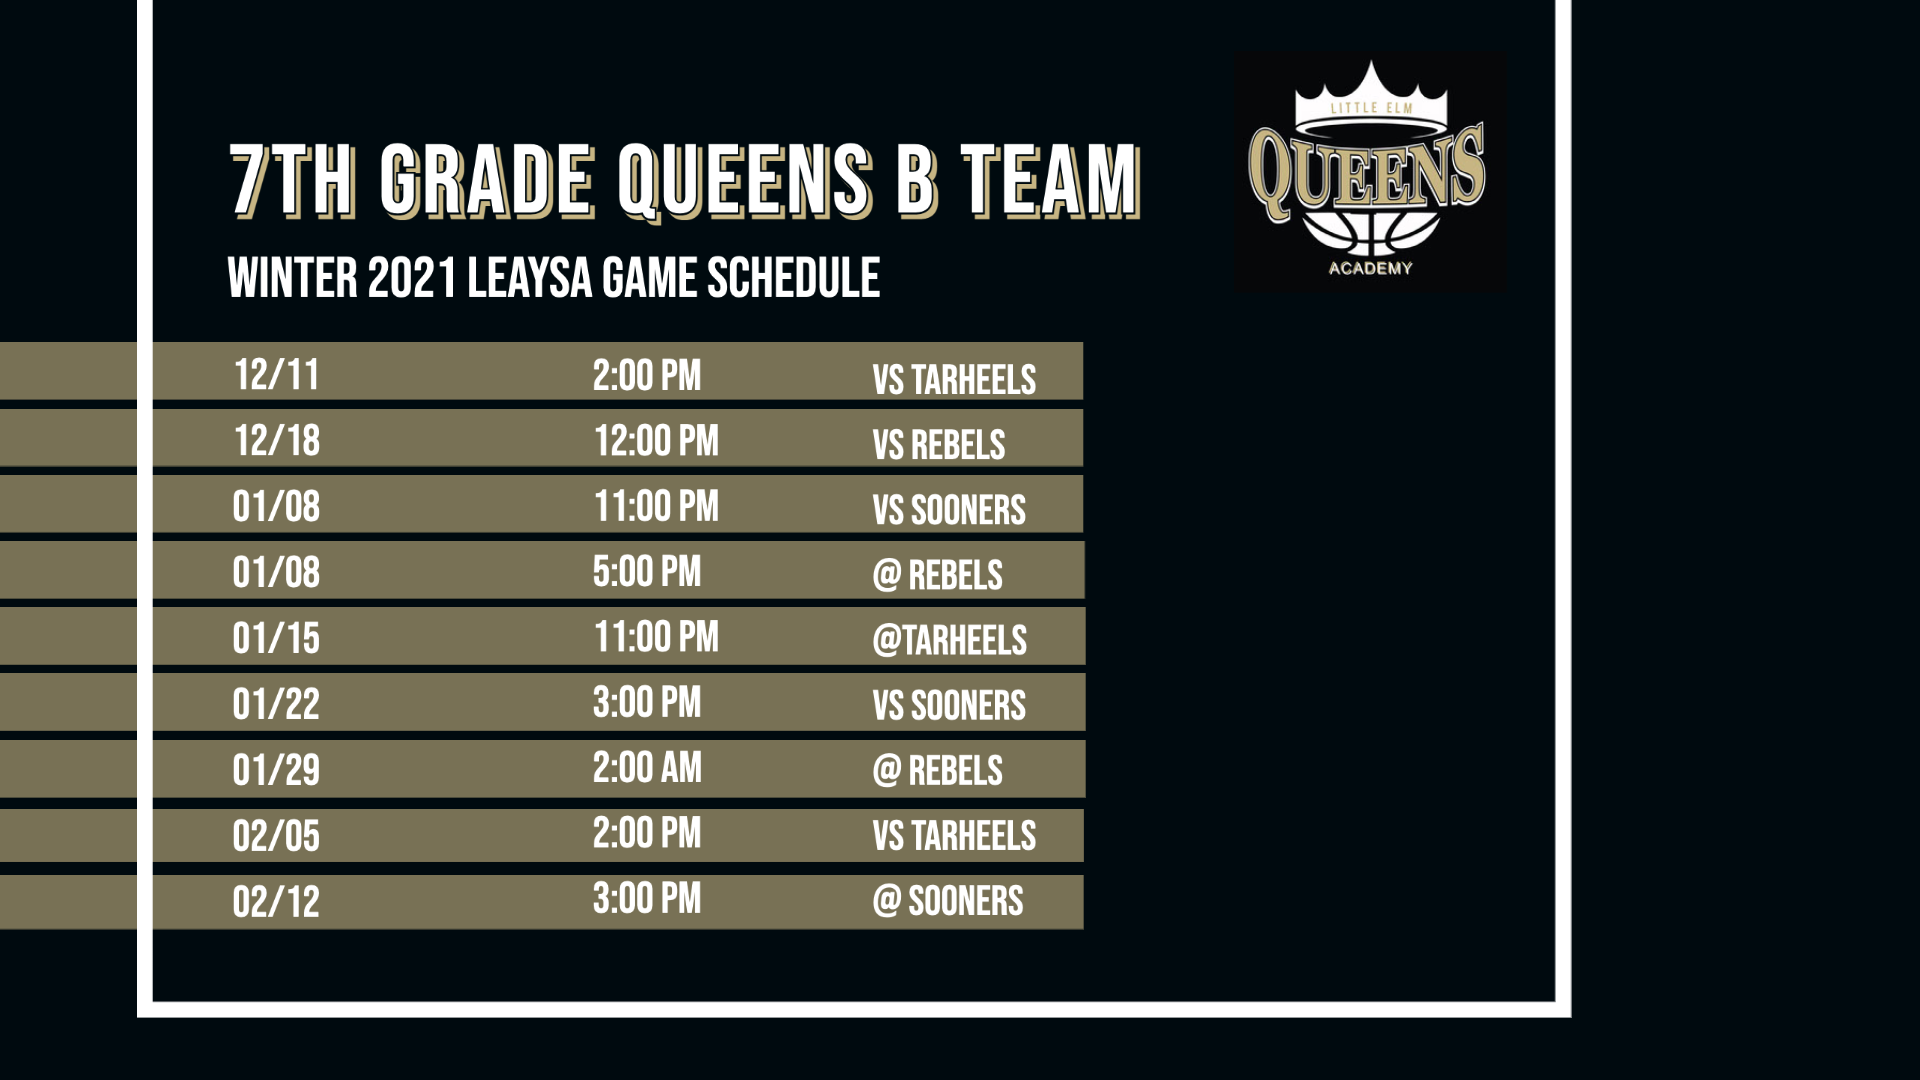 7th Grade Queens Game Schedule - B Team